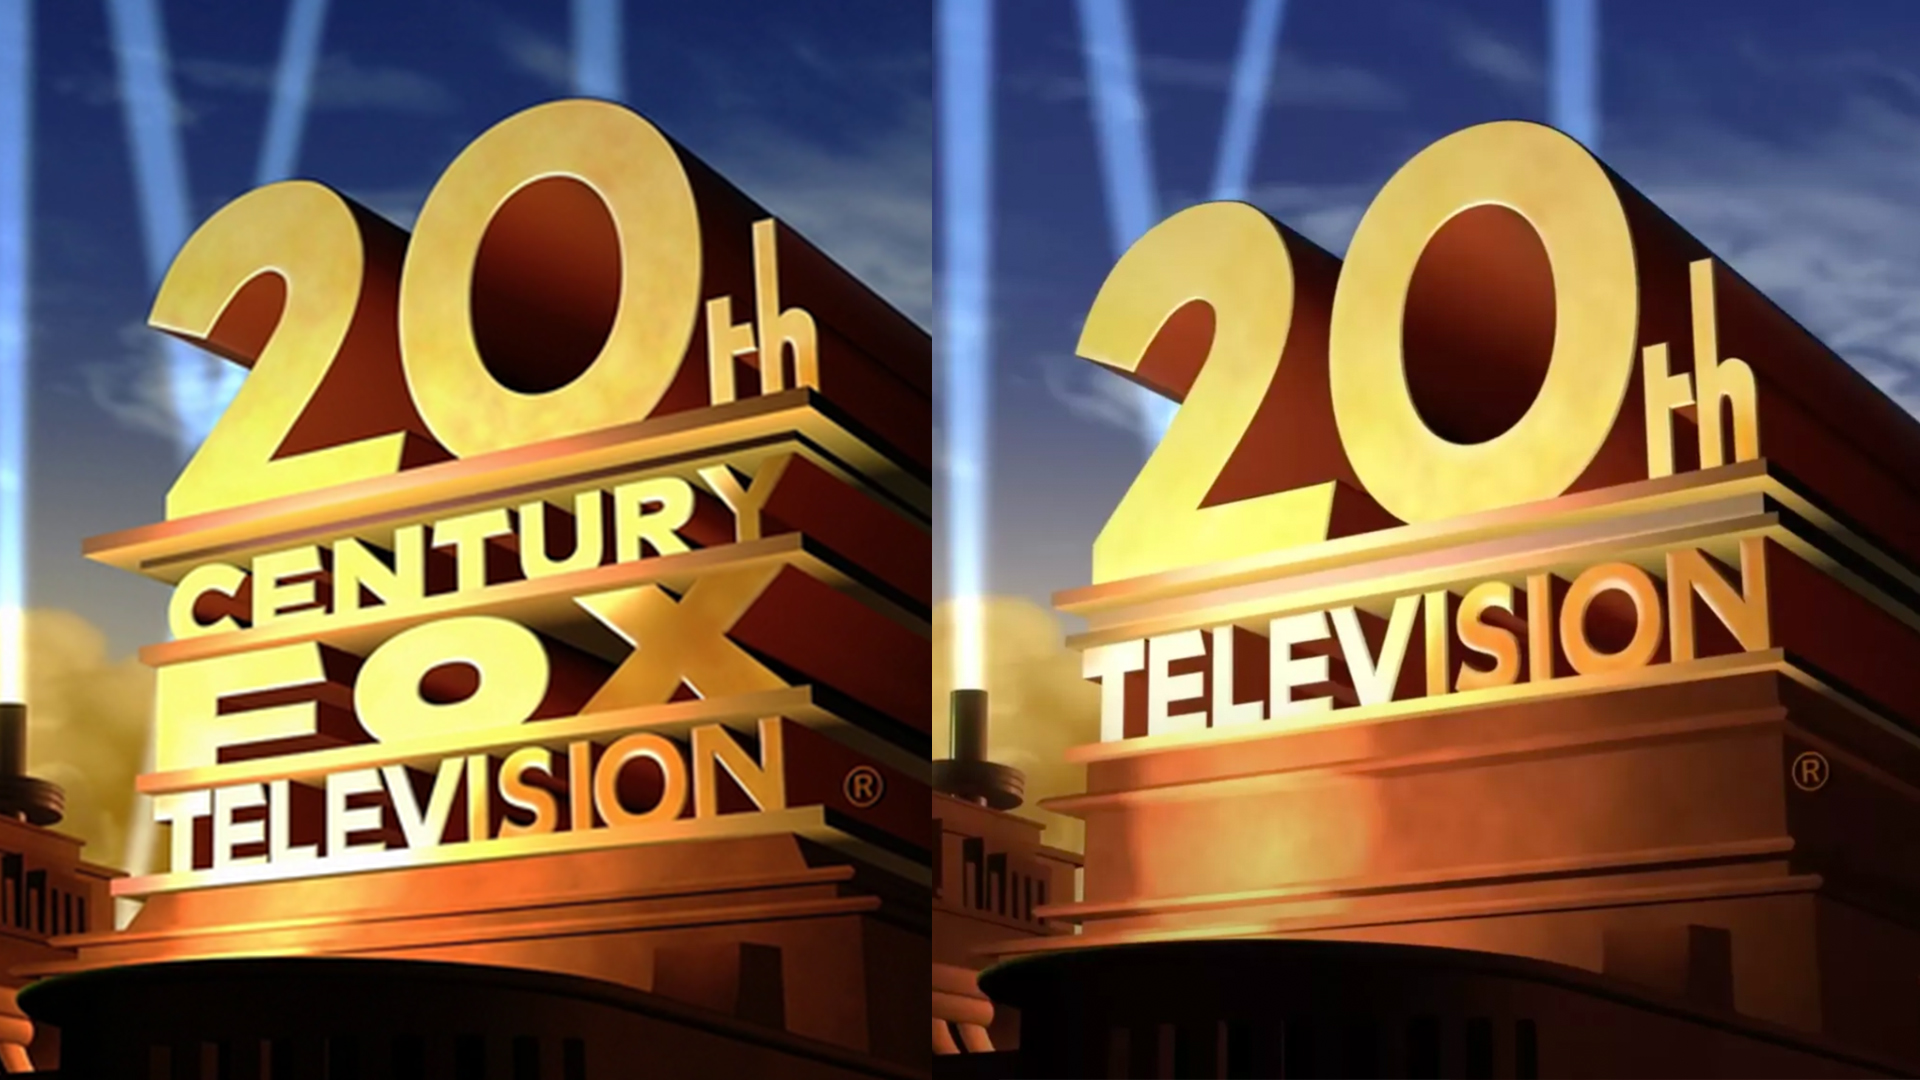 Disney's new 20th Century Fox TV logo is a real head-scratcher